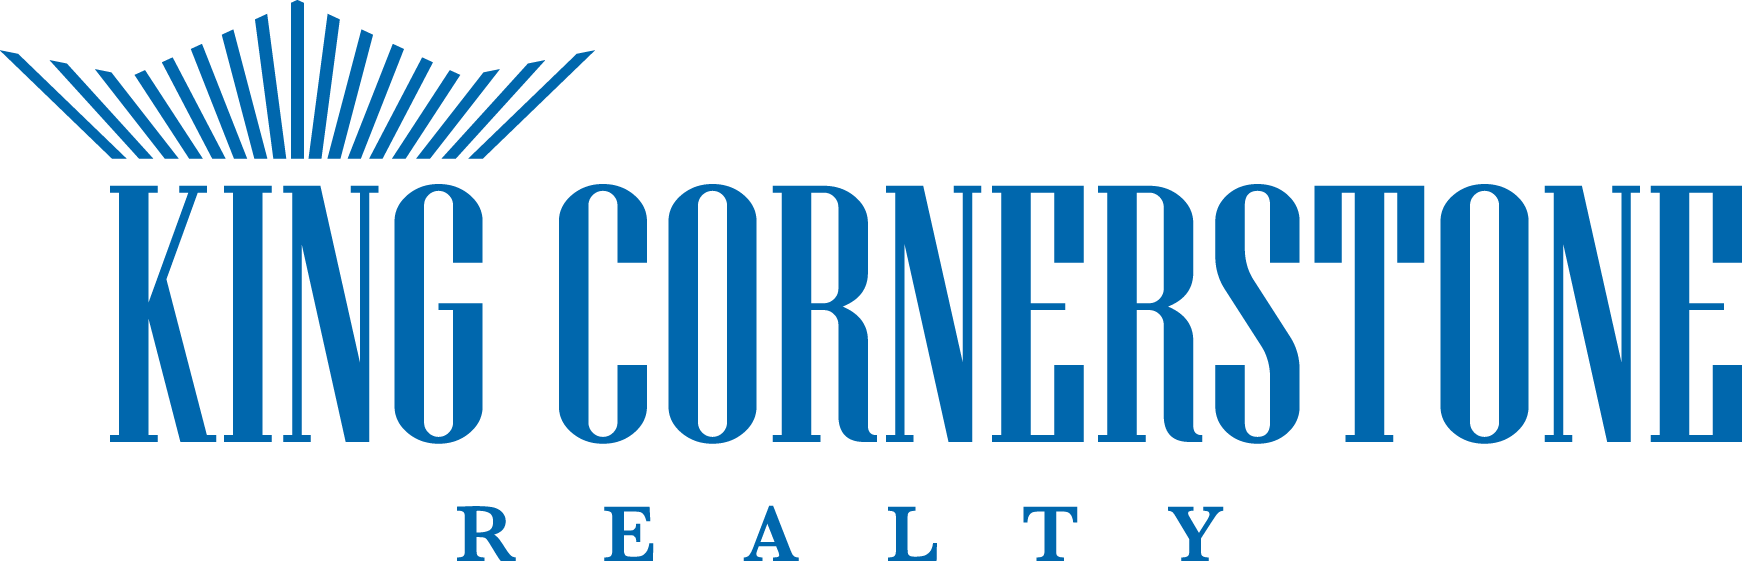 King Cornerstone Realty logo